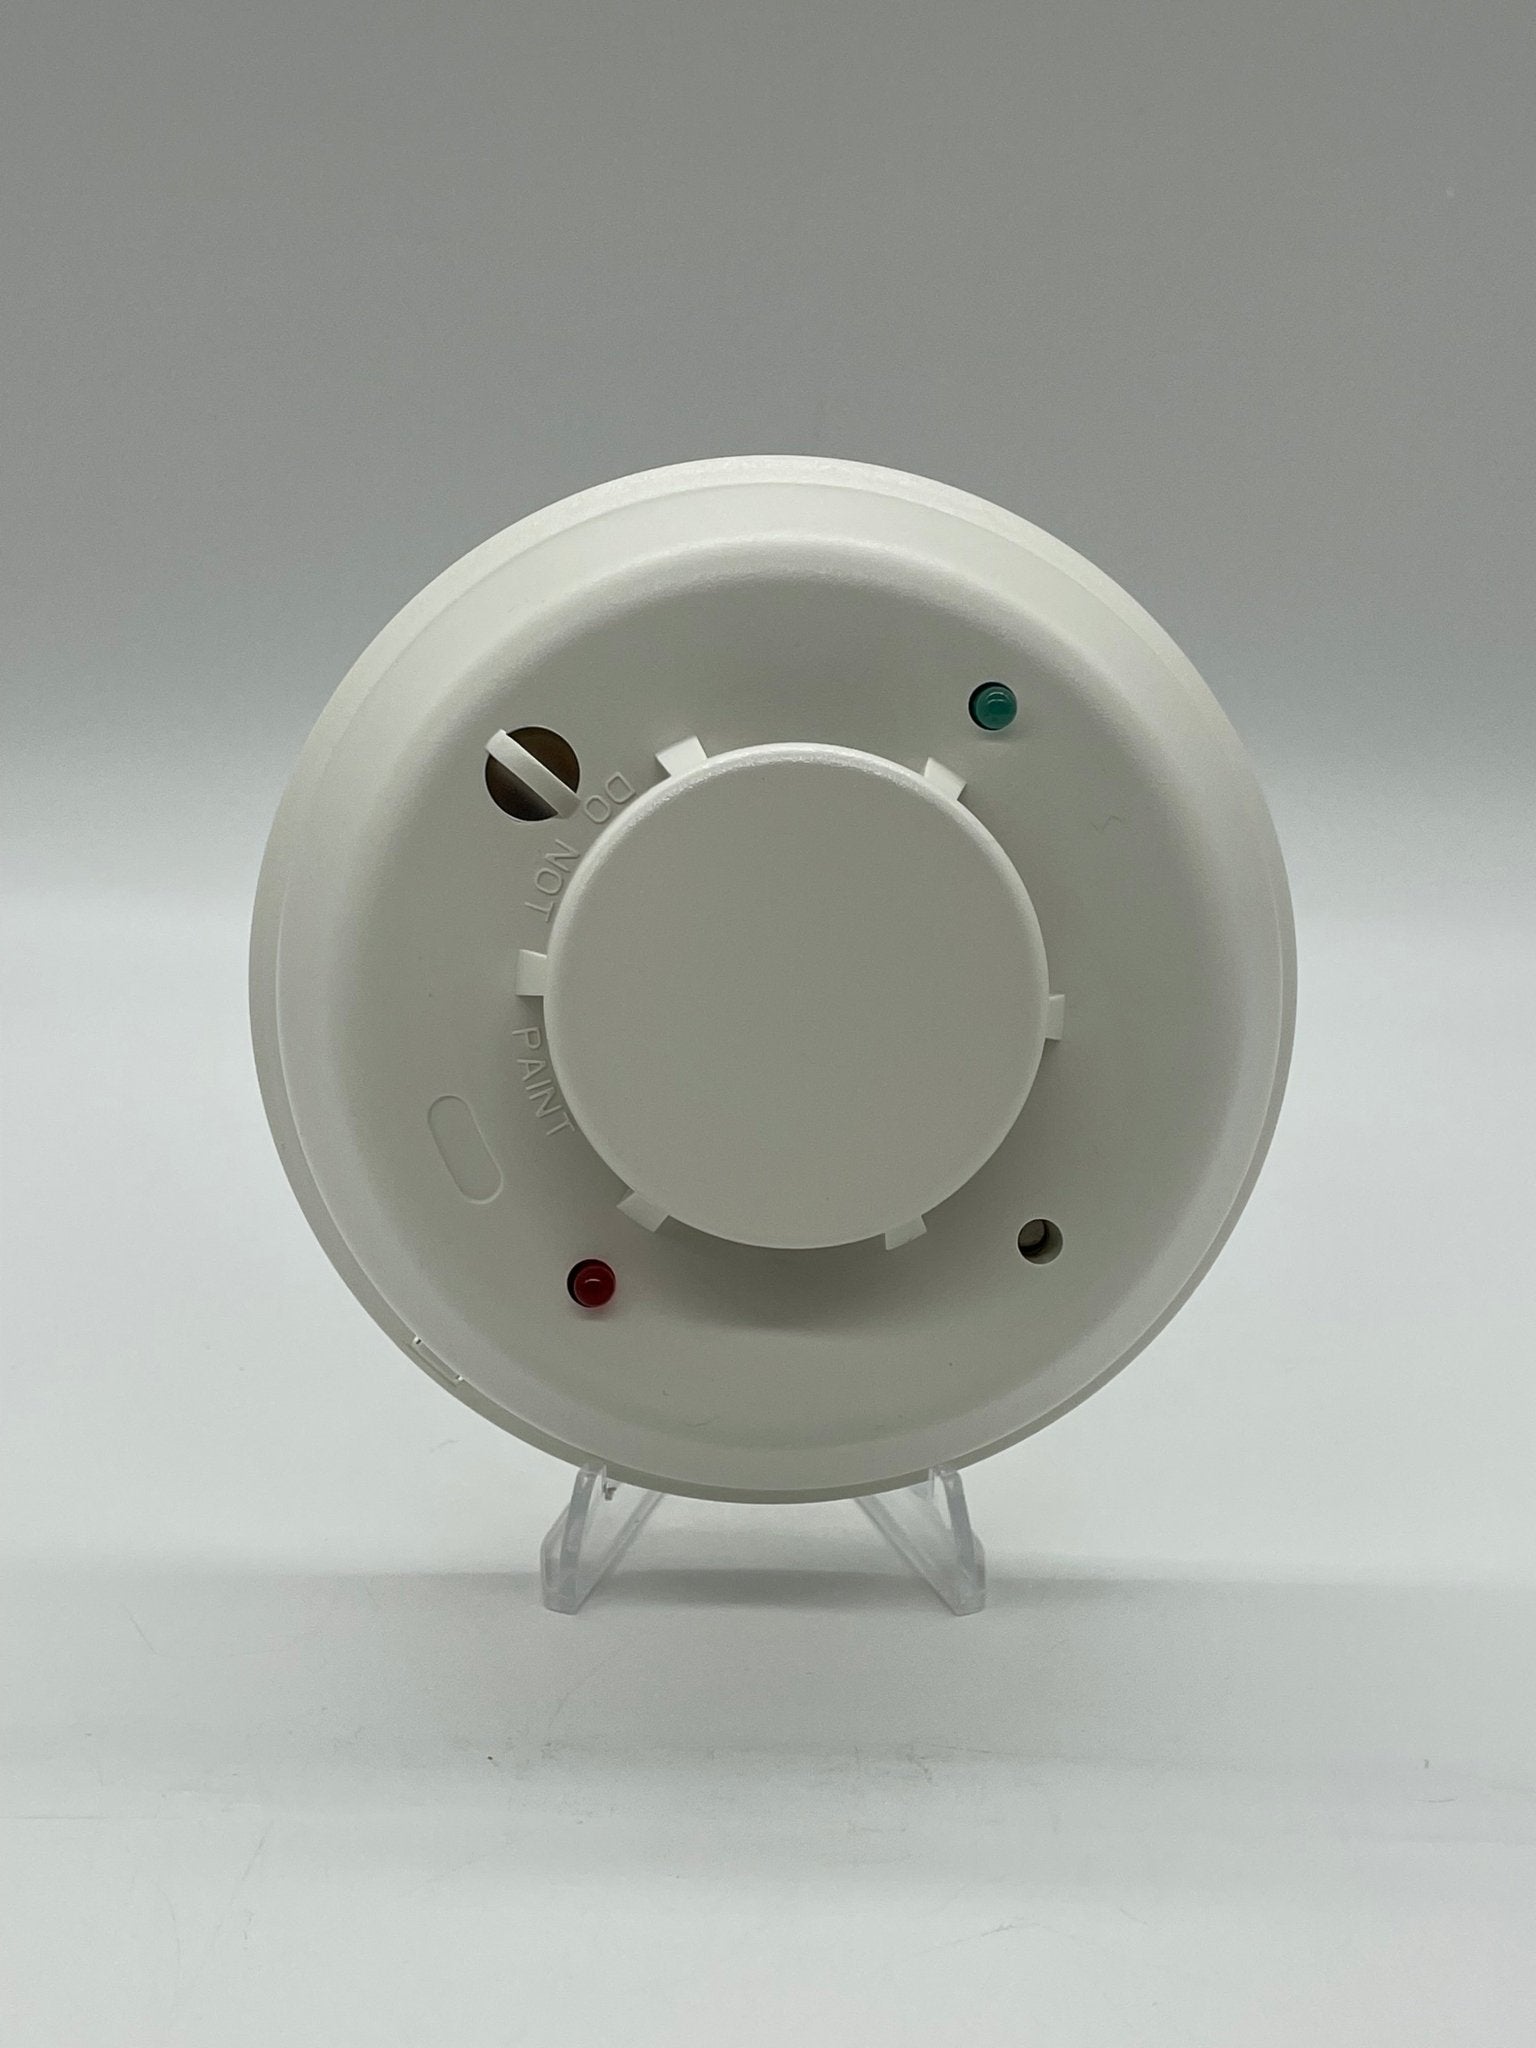 System Sensor 4WTAR-B - The Fire Alarm Supplier